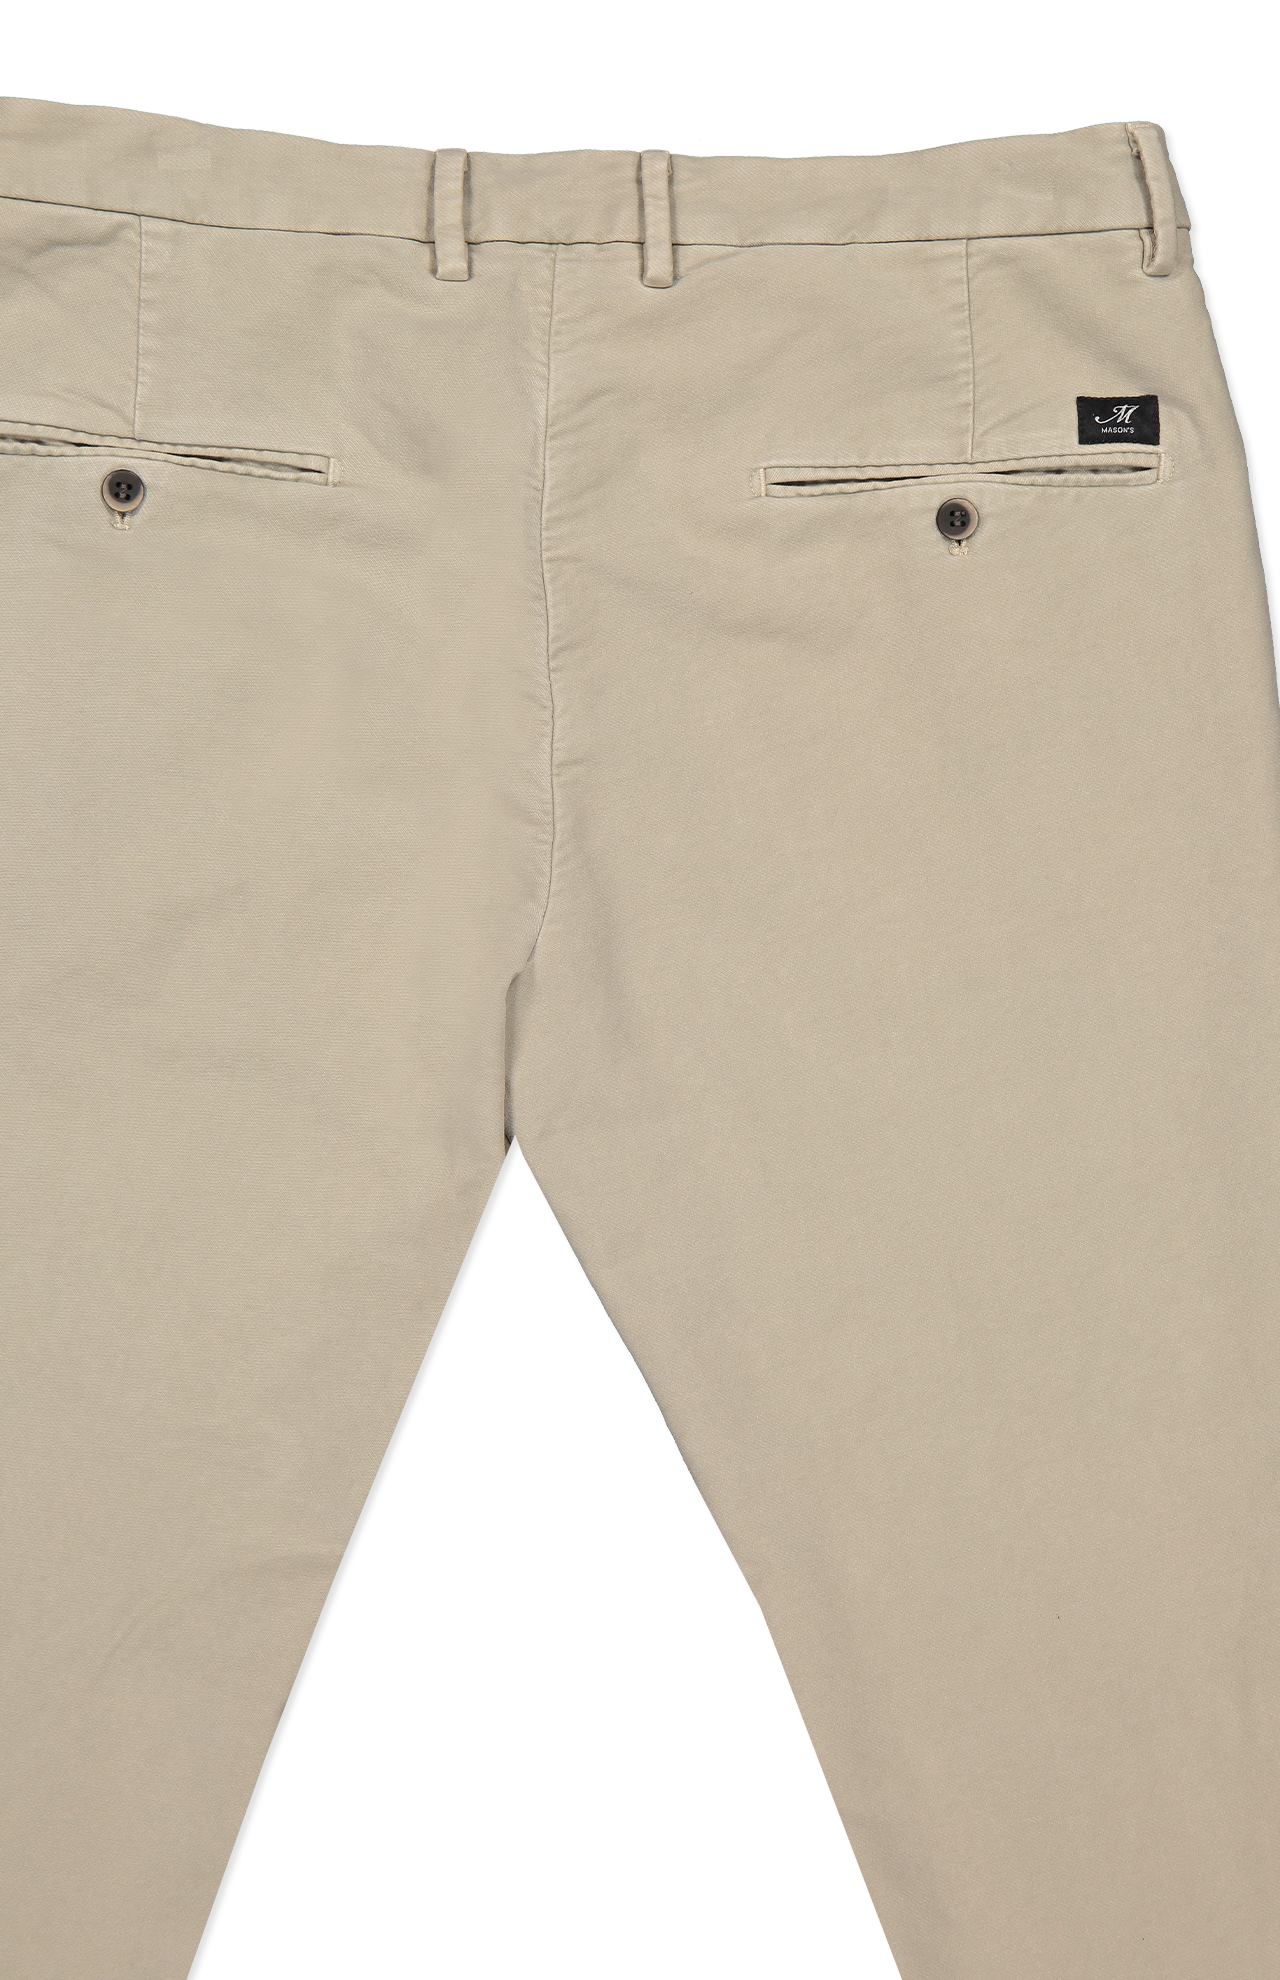 Mason's Torino Style Moleskin Chino Pant in Cement Back Detail Image  (6955219976307)